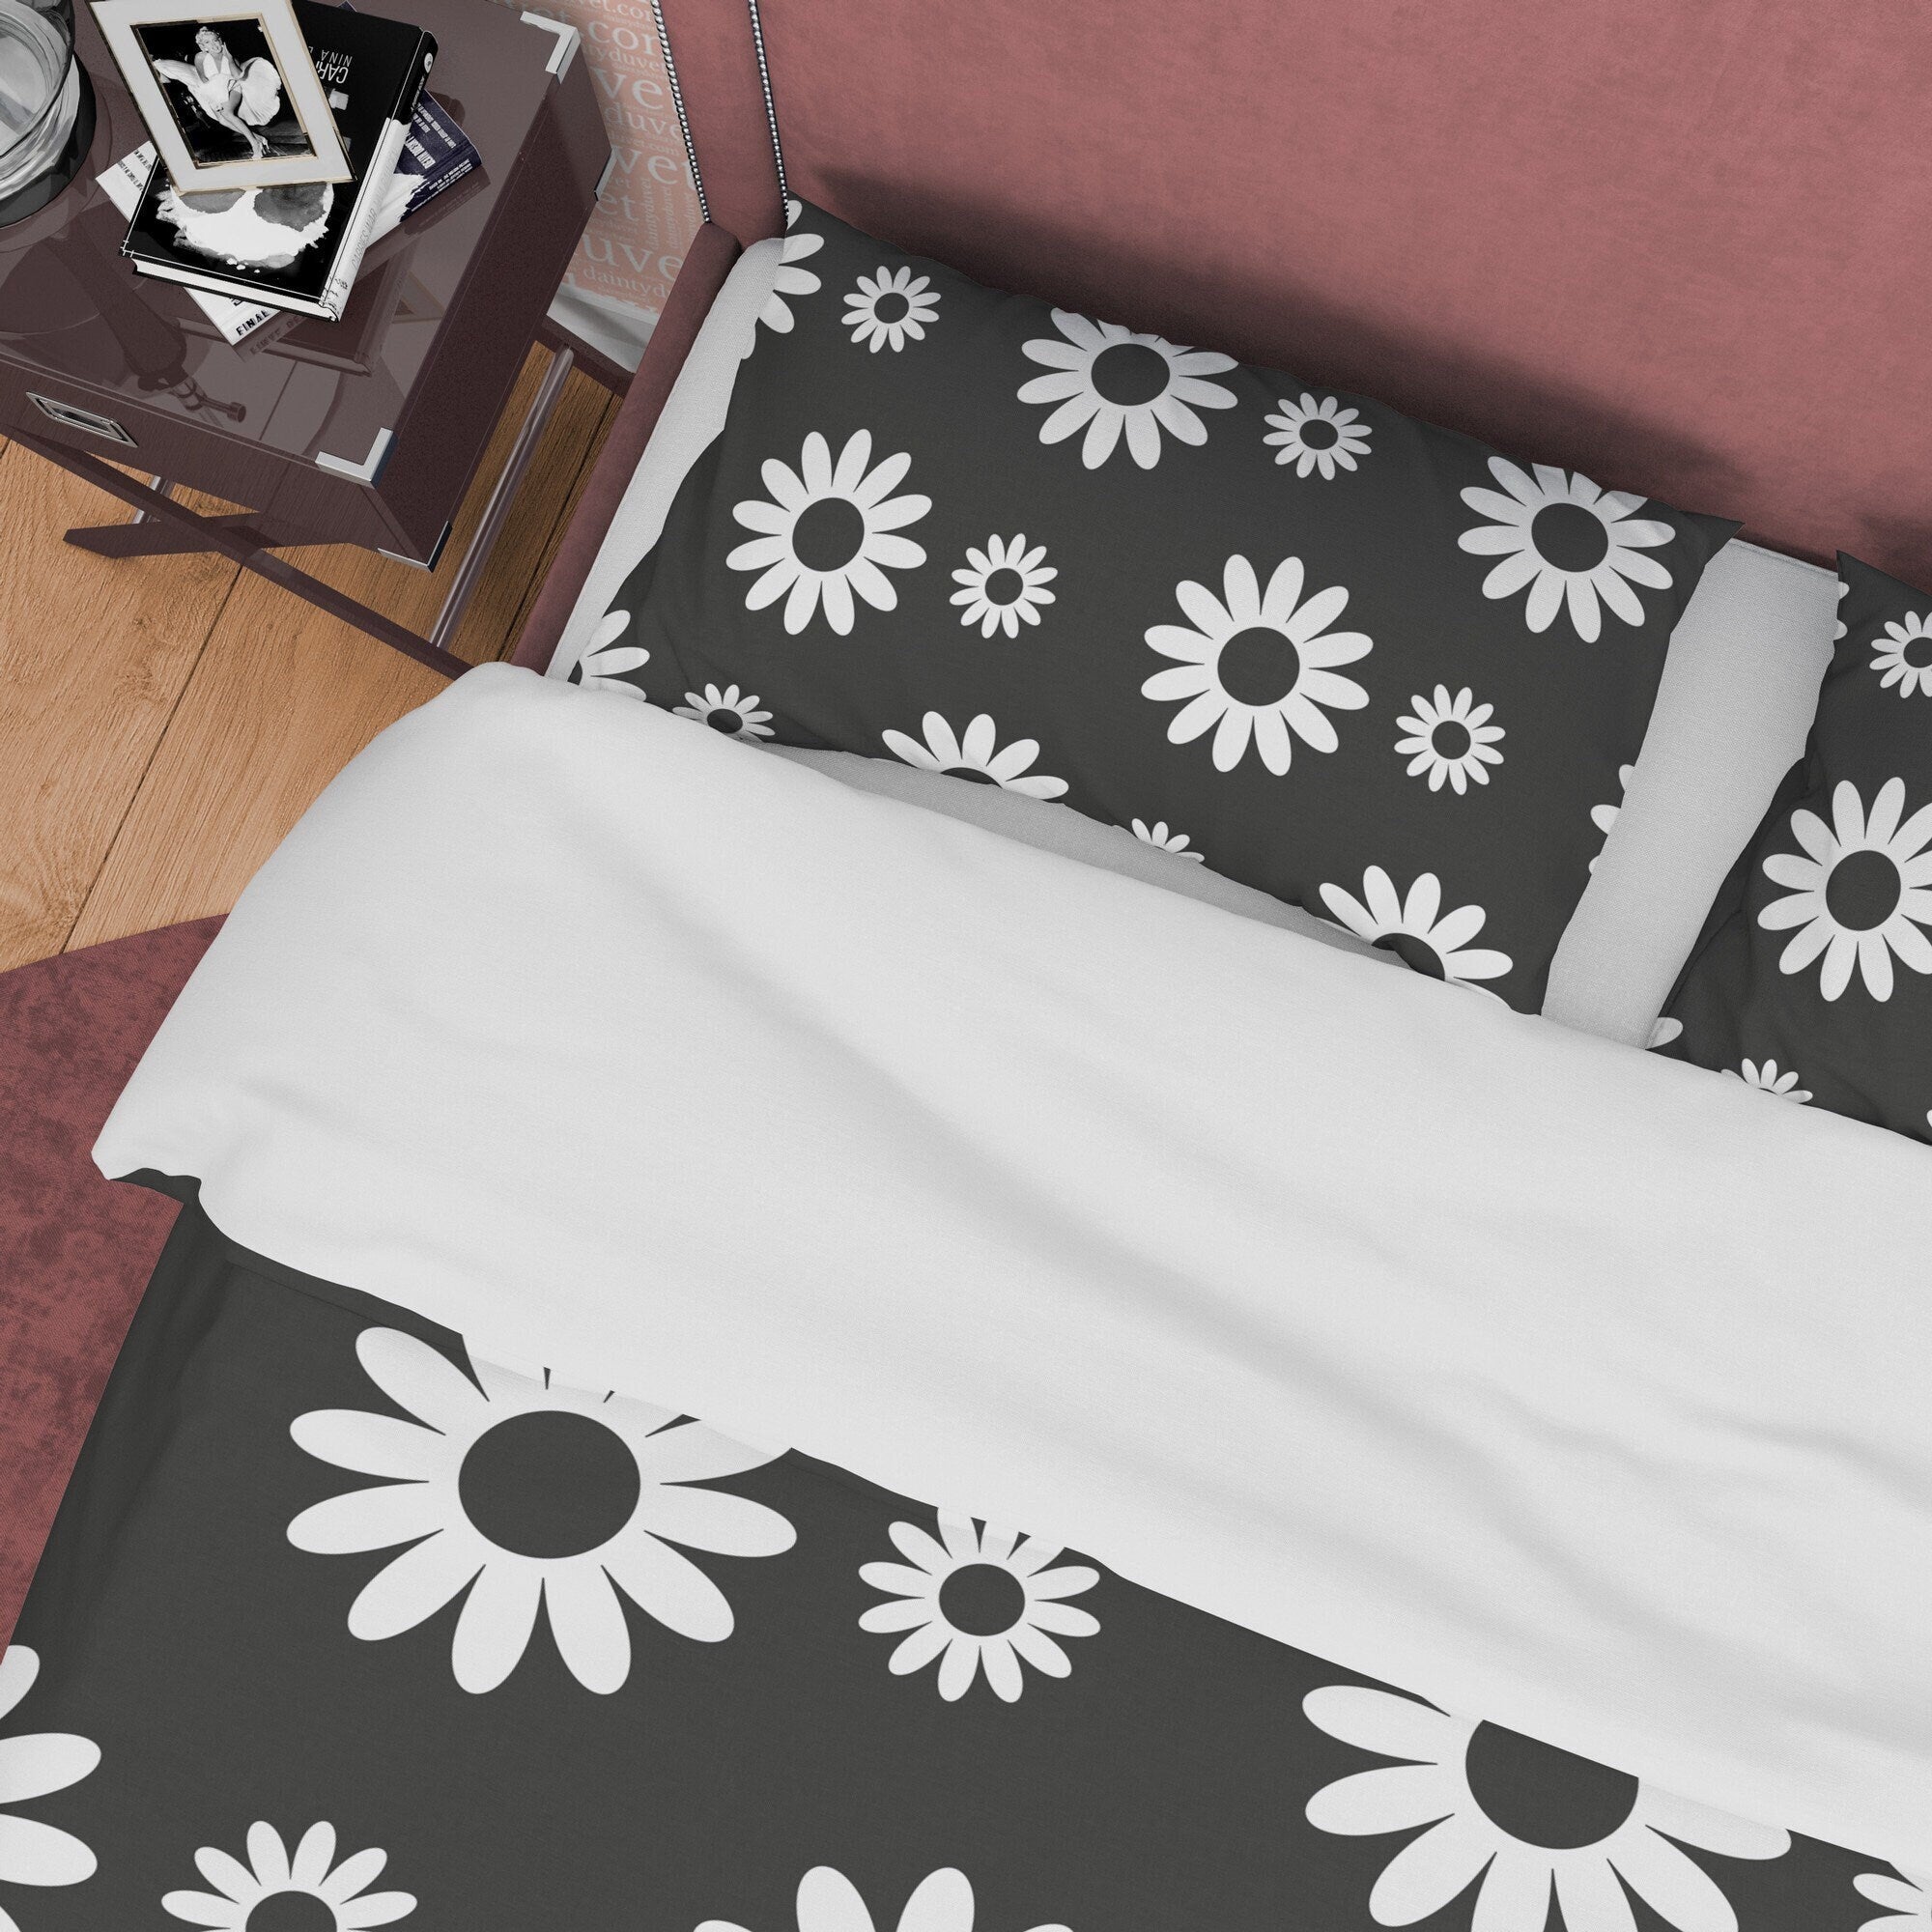 Flower Black and White Duvet Cover Set, Simple Floral Blanket Cover Retro Printed Bedding Set, 90s Nostalgia Quilt Cover, Groovy Bedspread